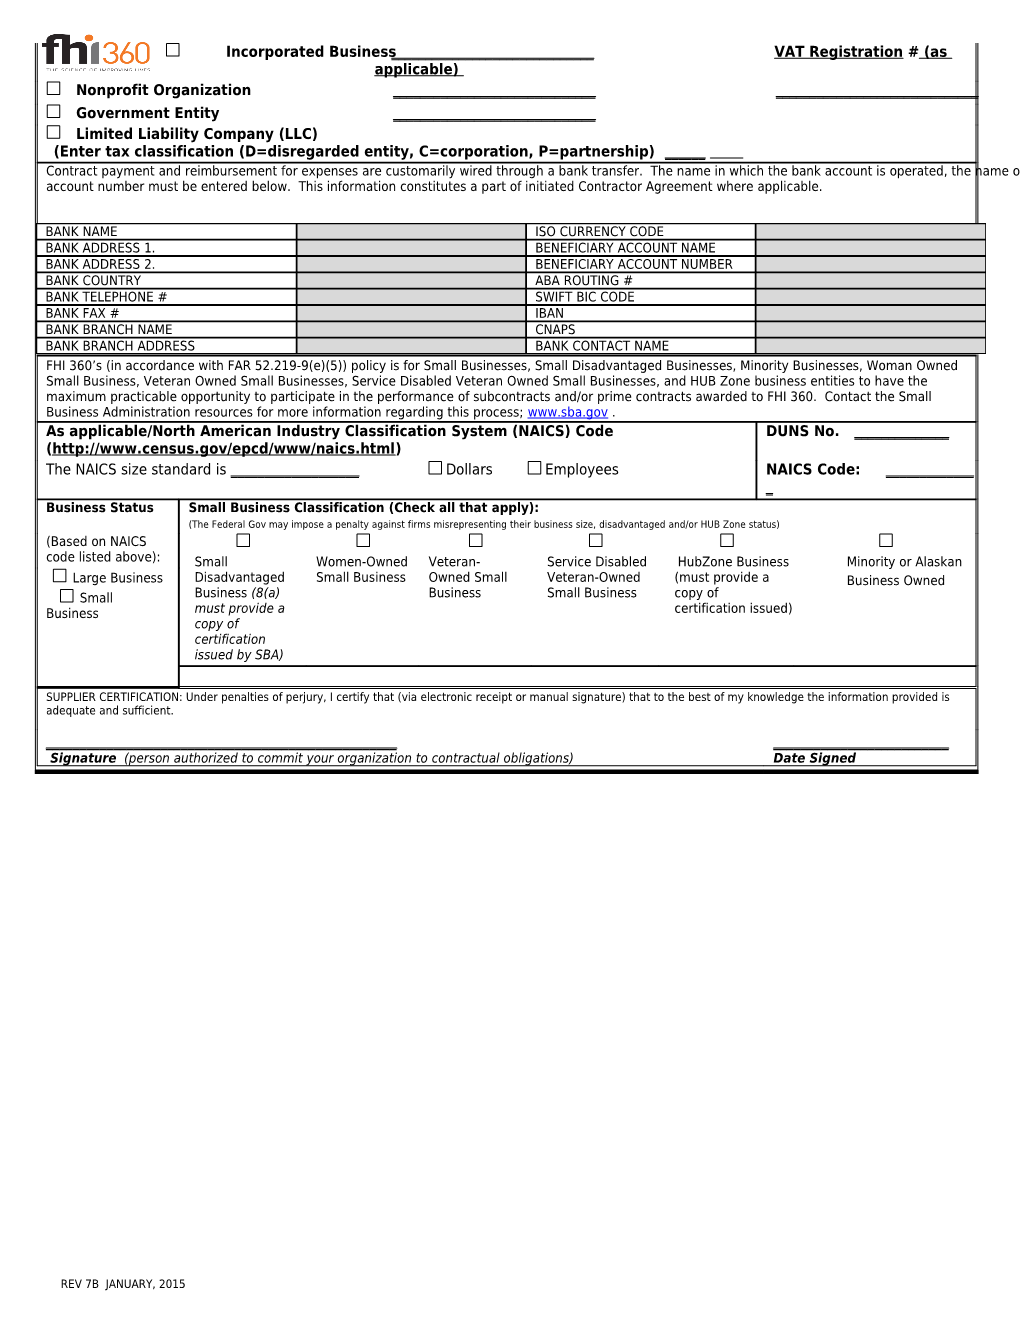 Supplier Certification Form s1